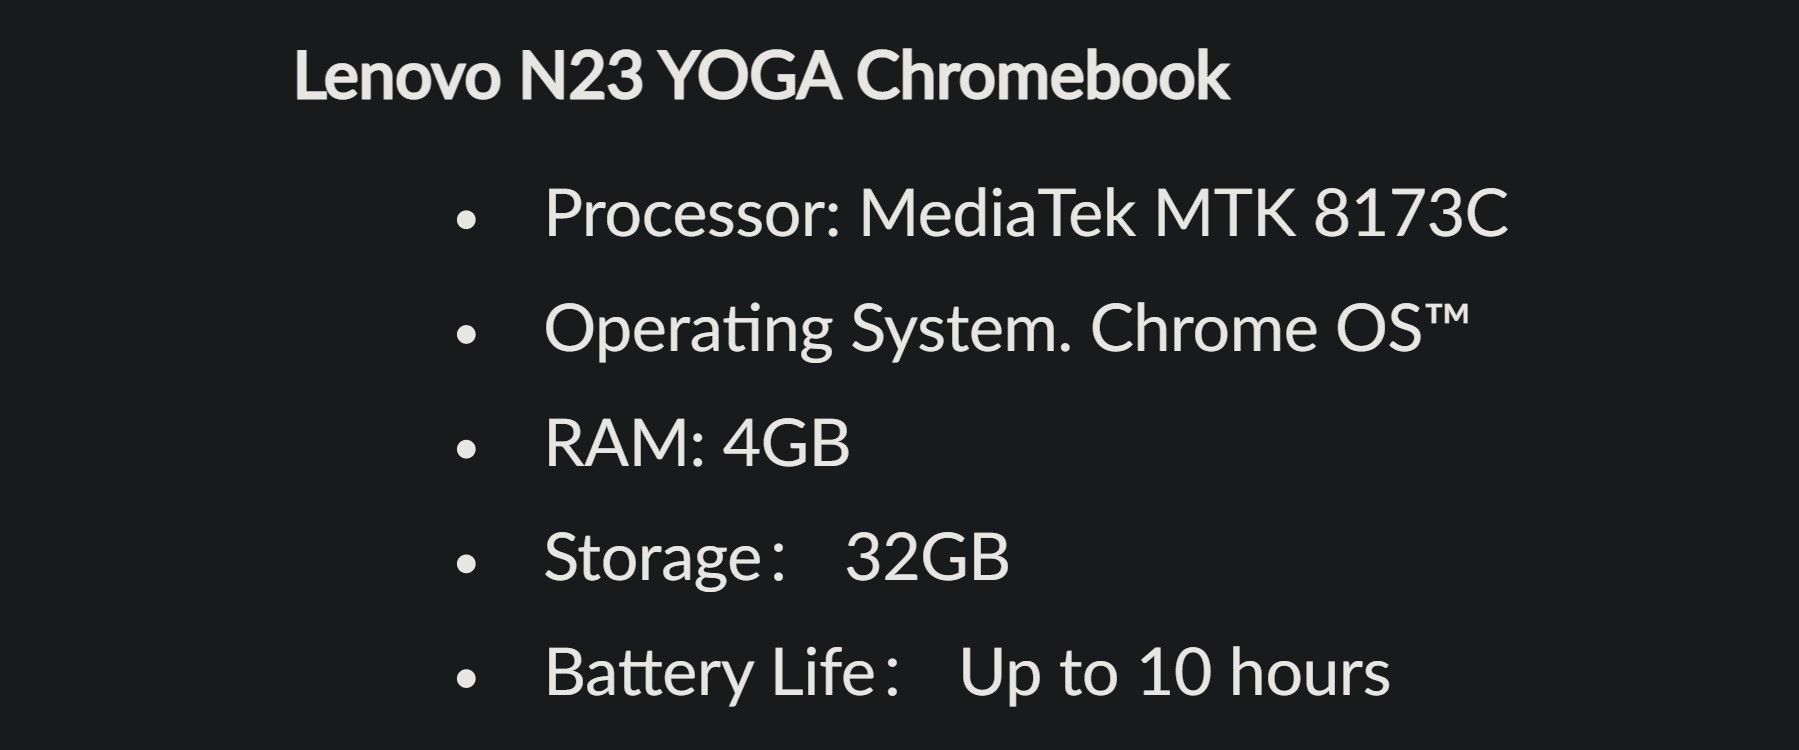 Lenovo Yoga N23 Chromebook 规格